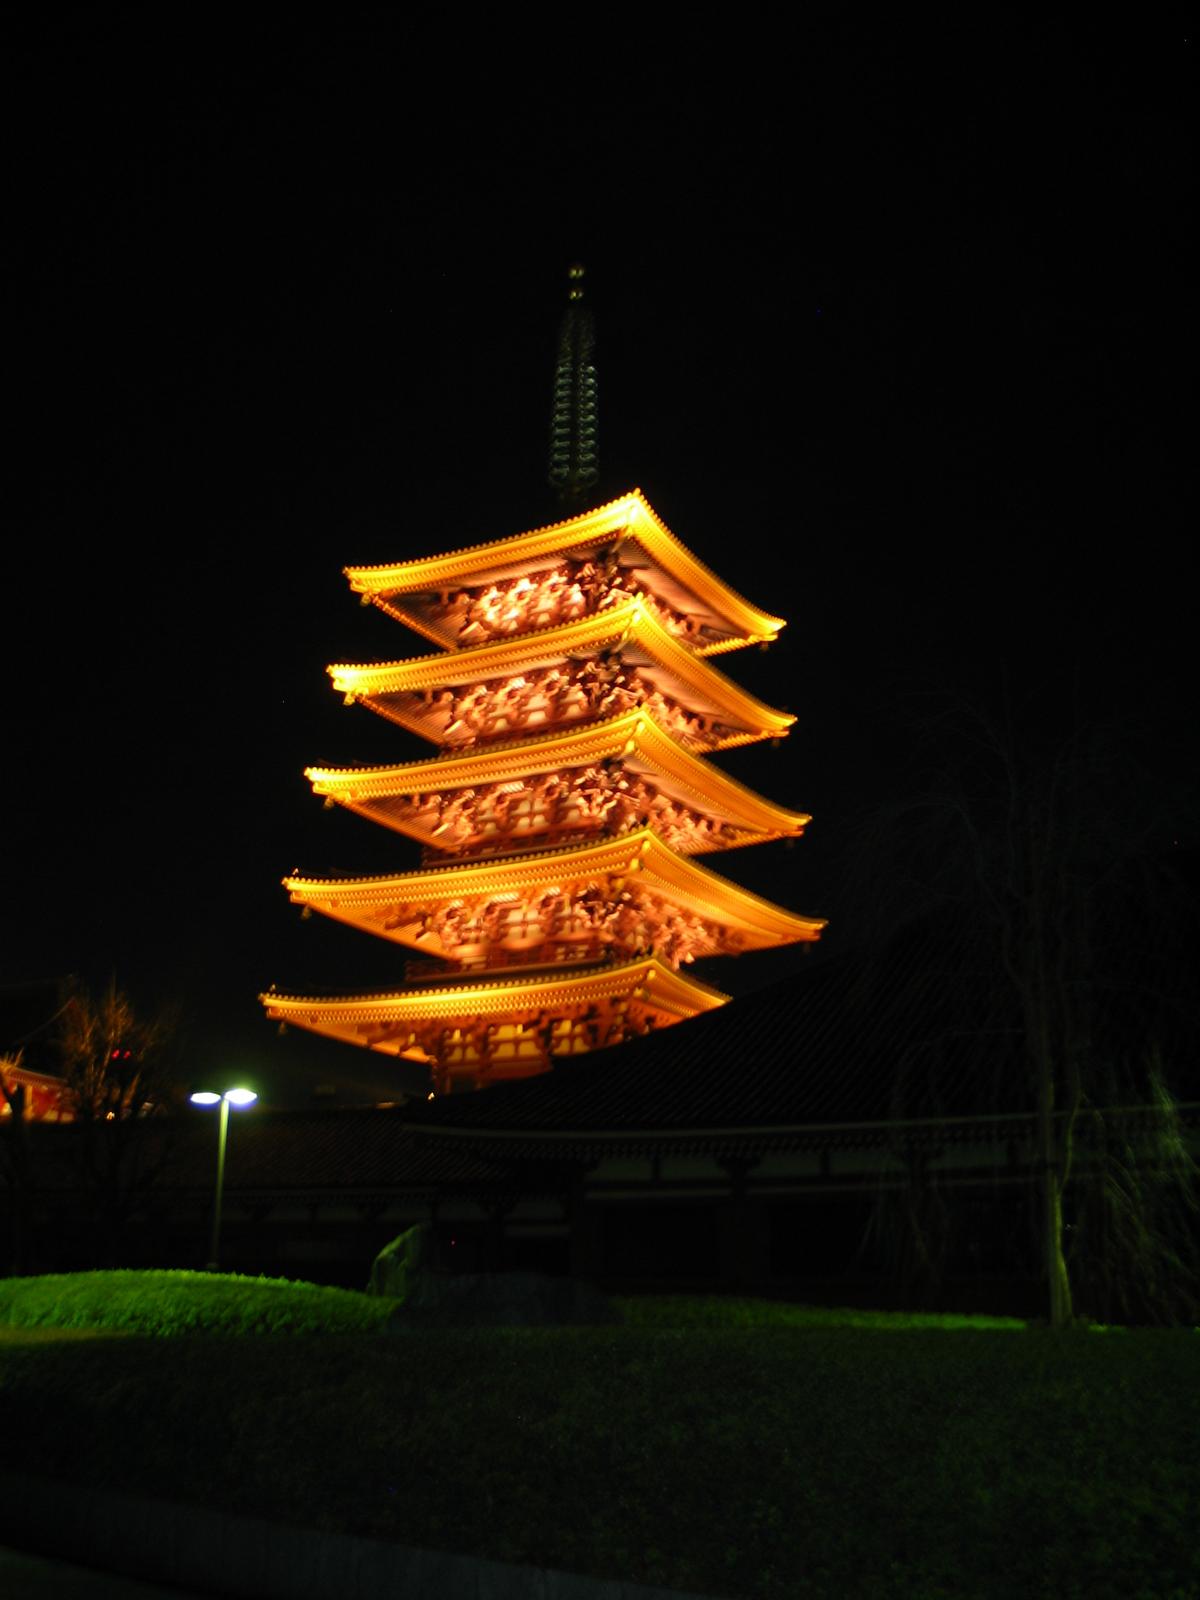 Asakusa at night